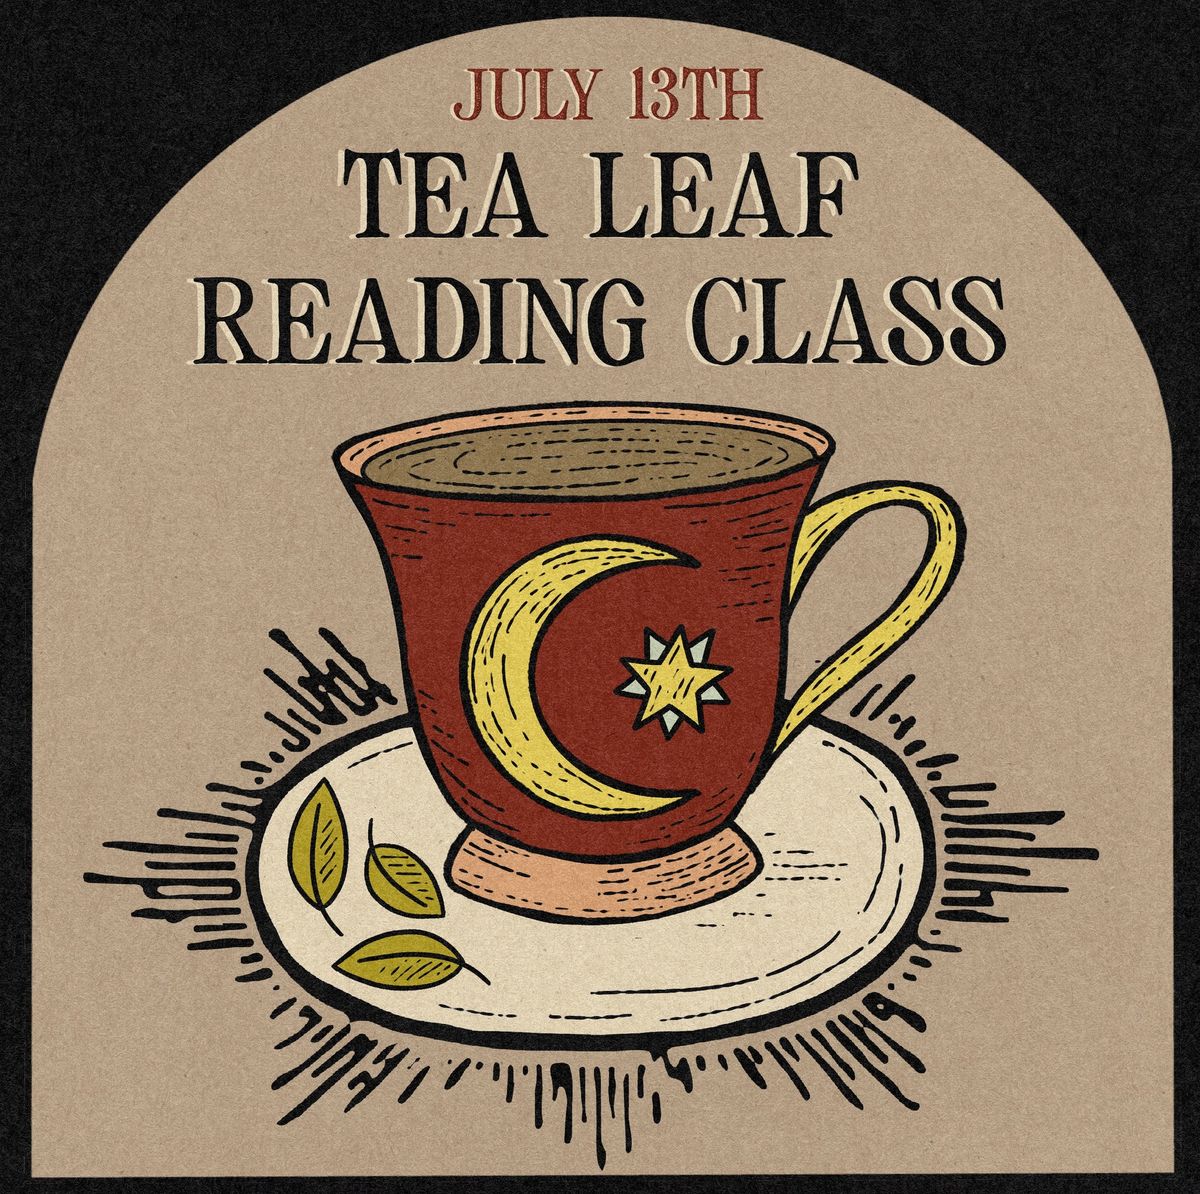 Tea Leaf Reading Class